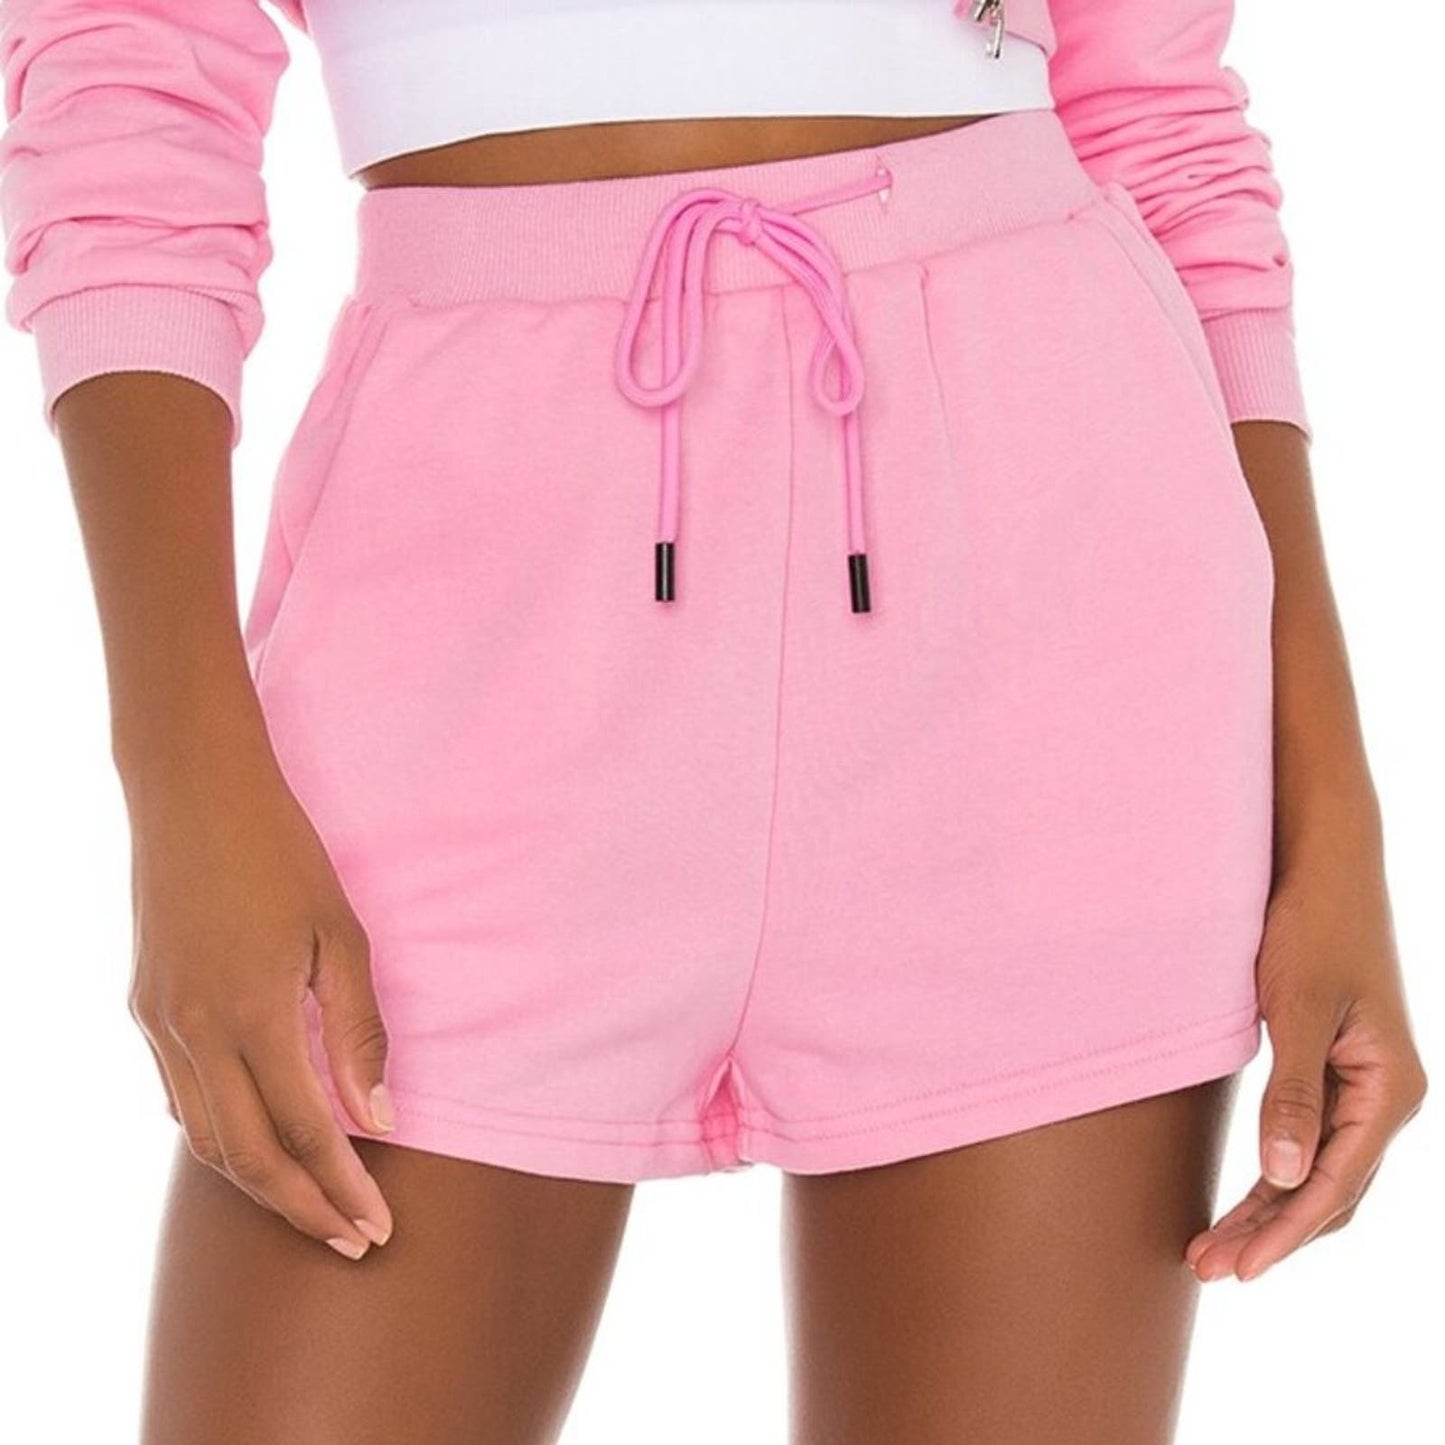 Revolve Superdown Danna Fleece Shorts in Pink NWOT Size XS